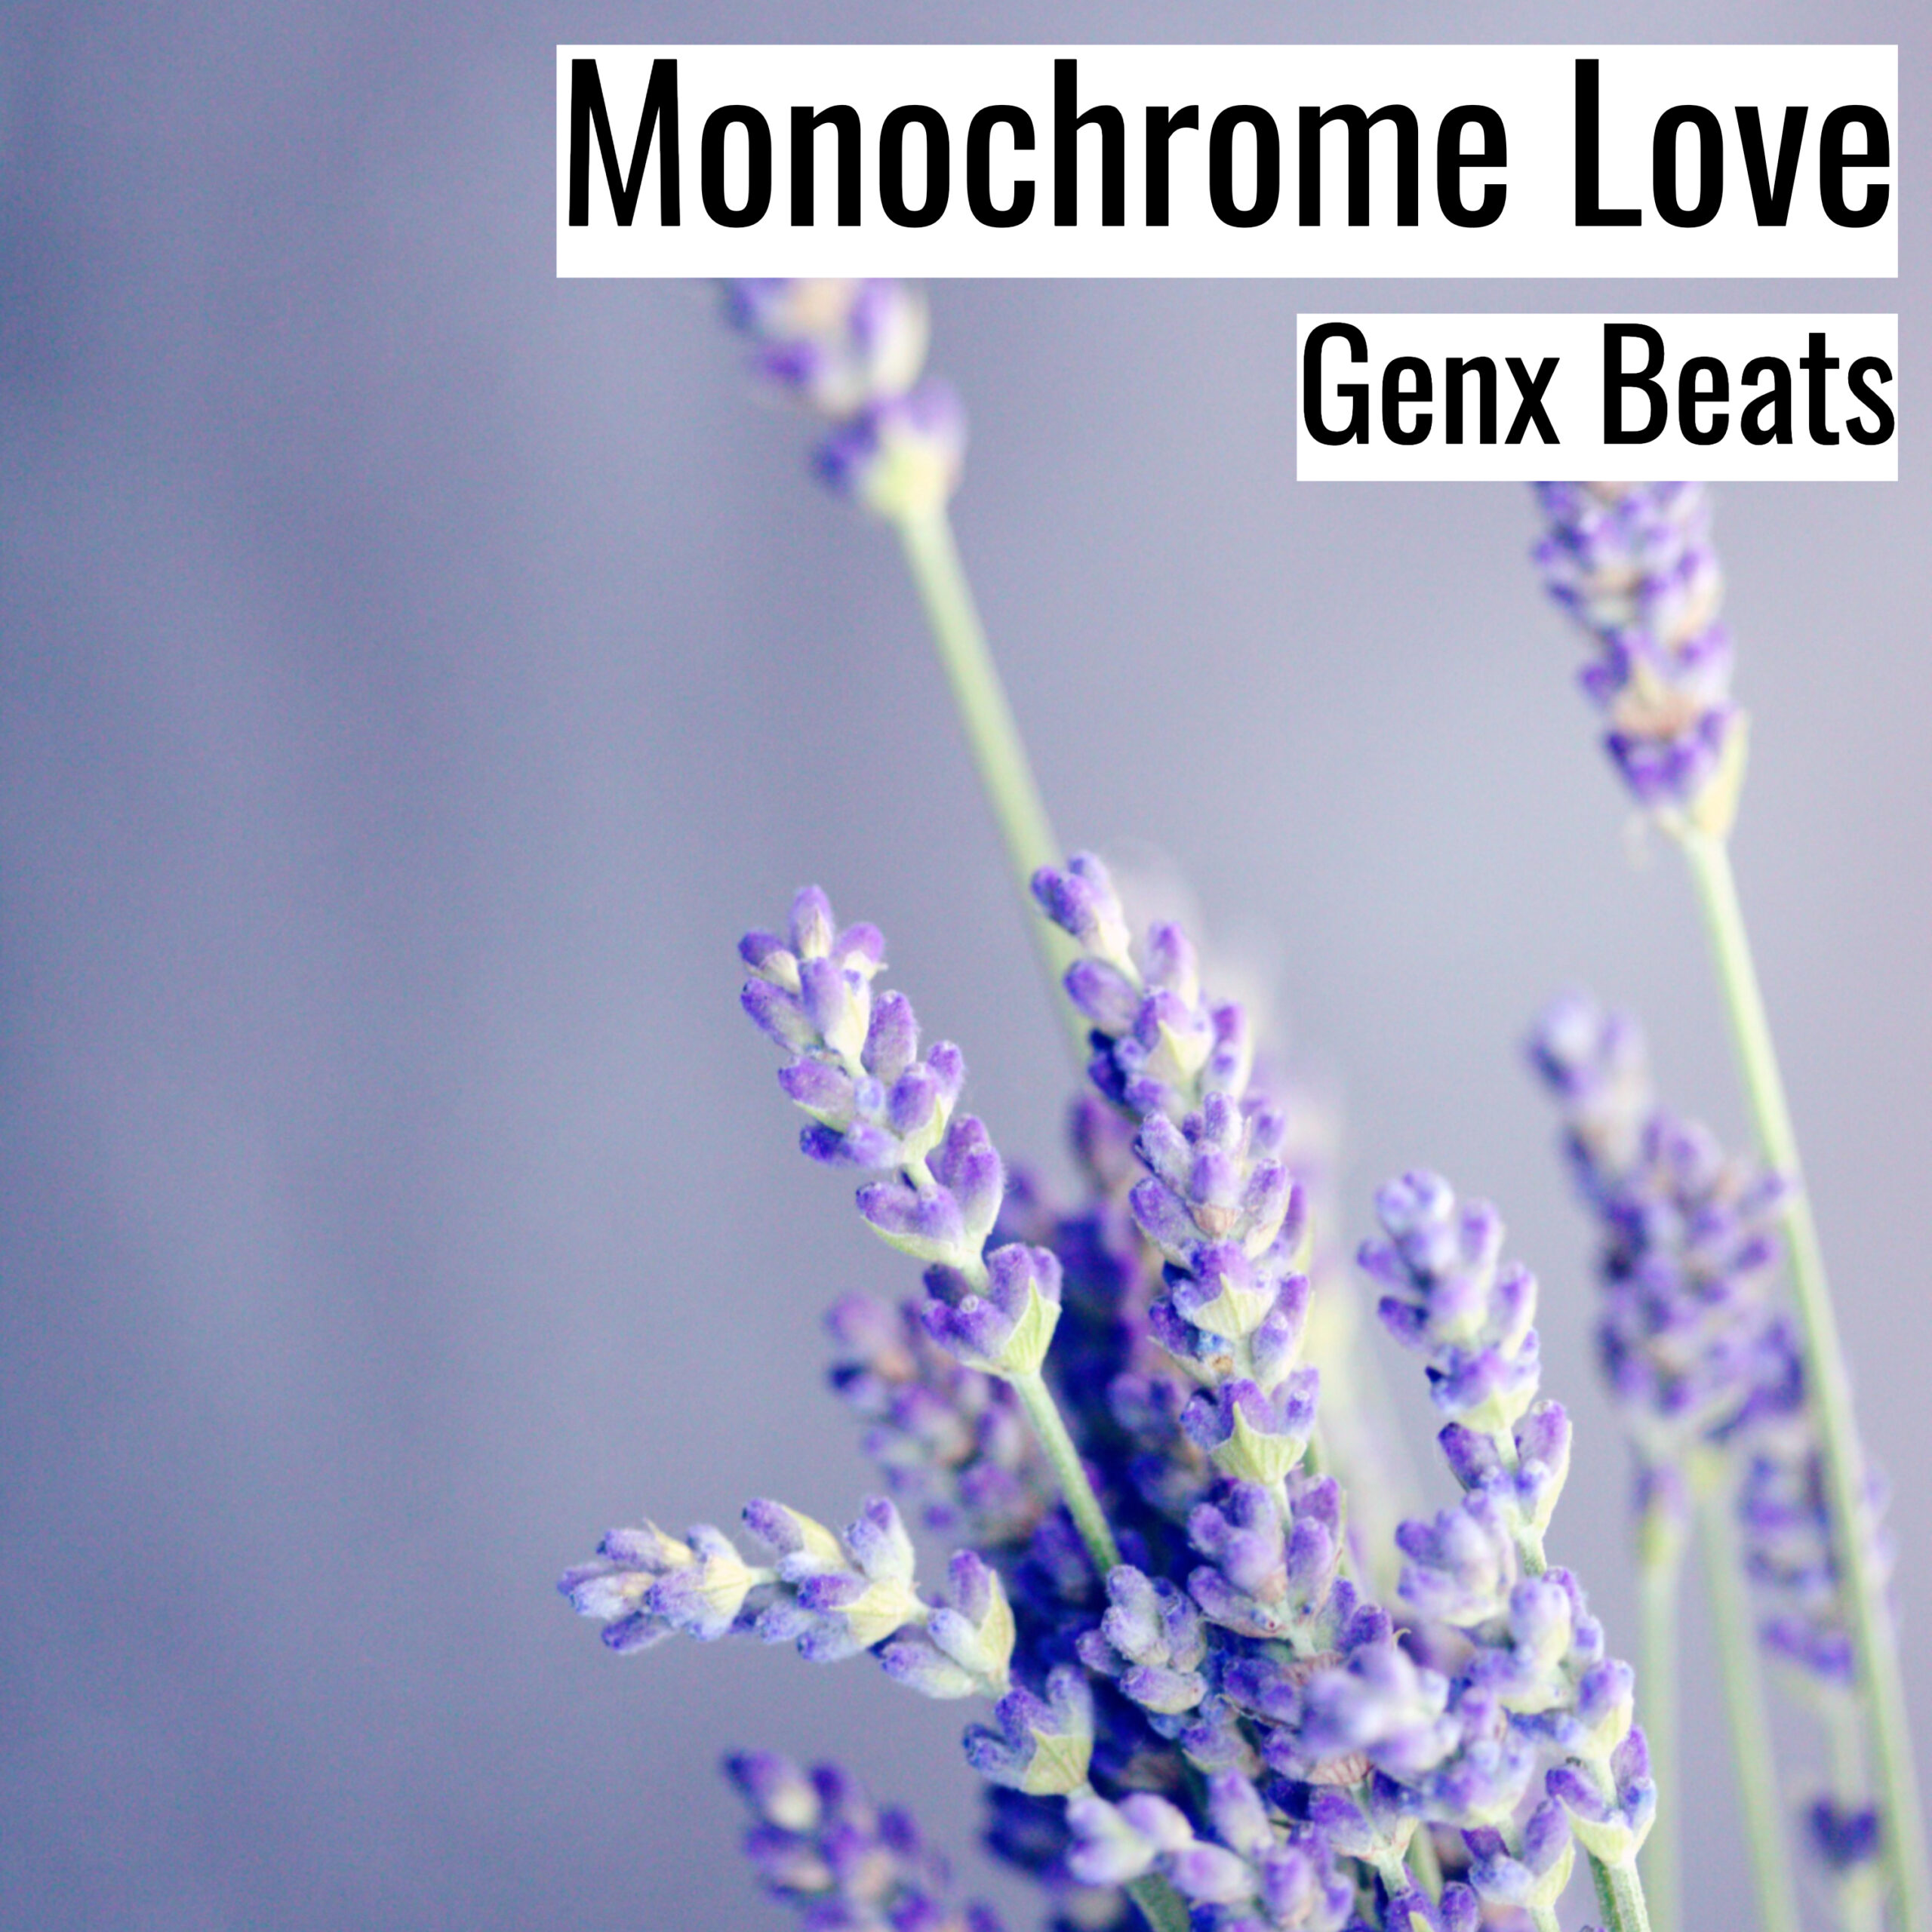 Monochrome Love scaled